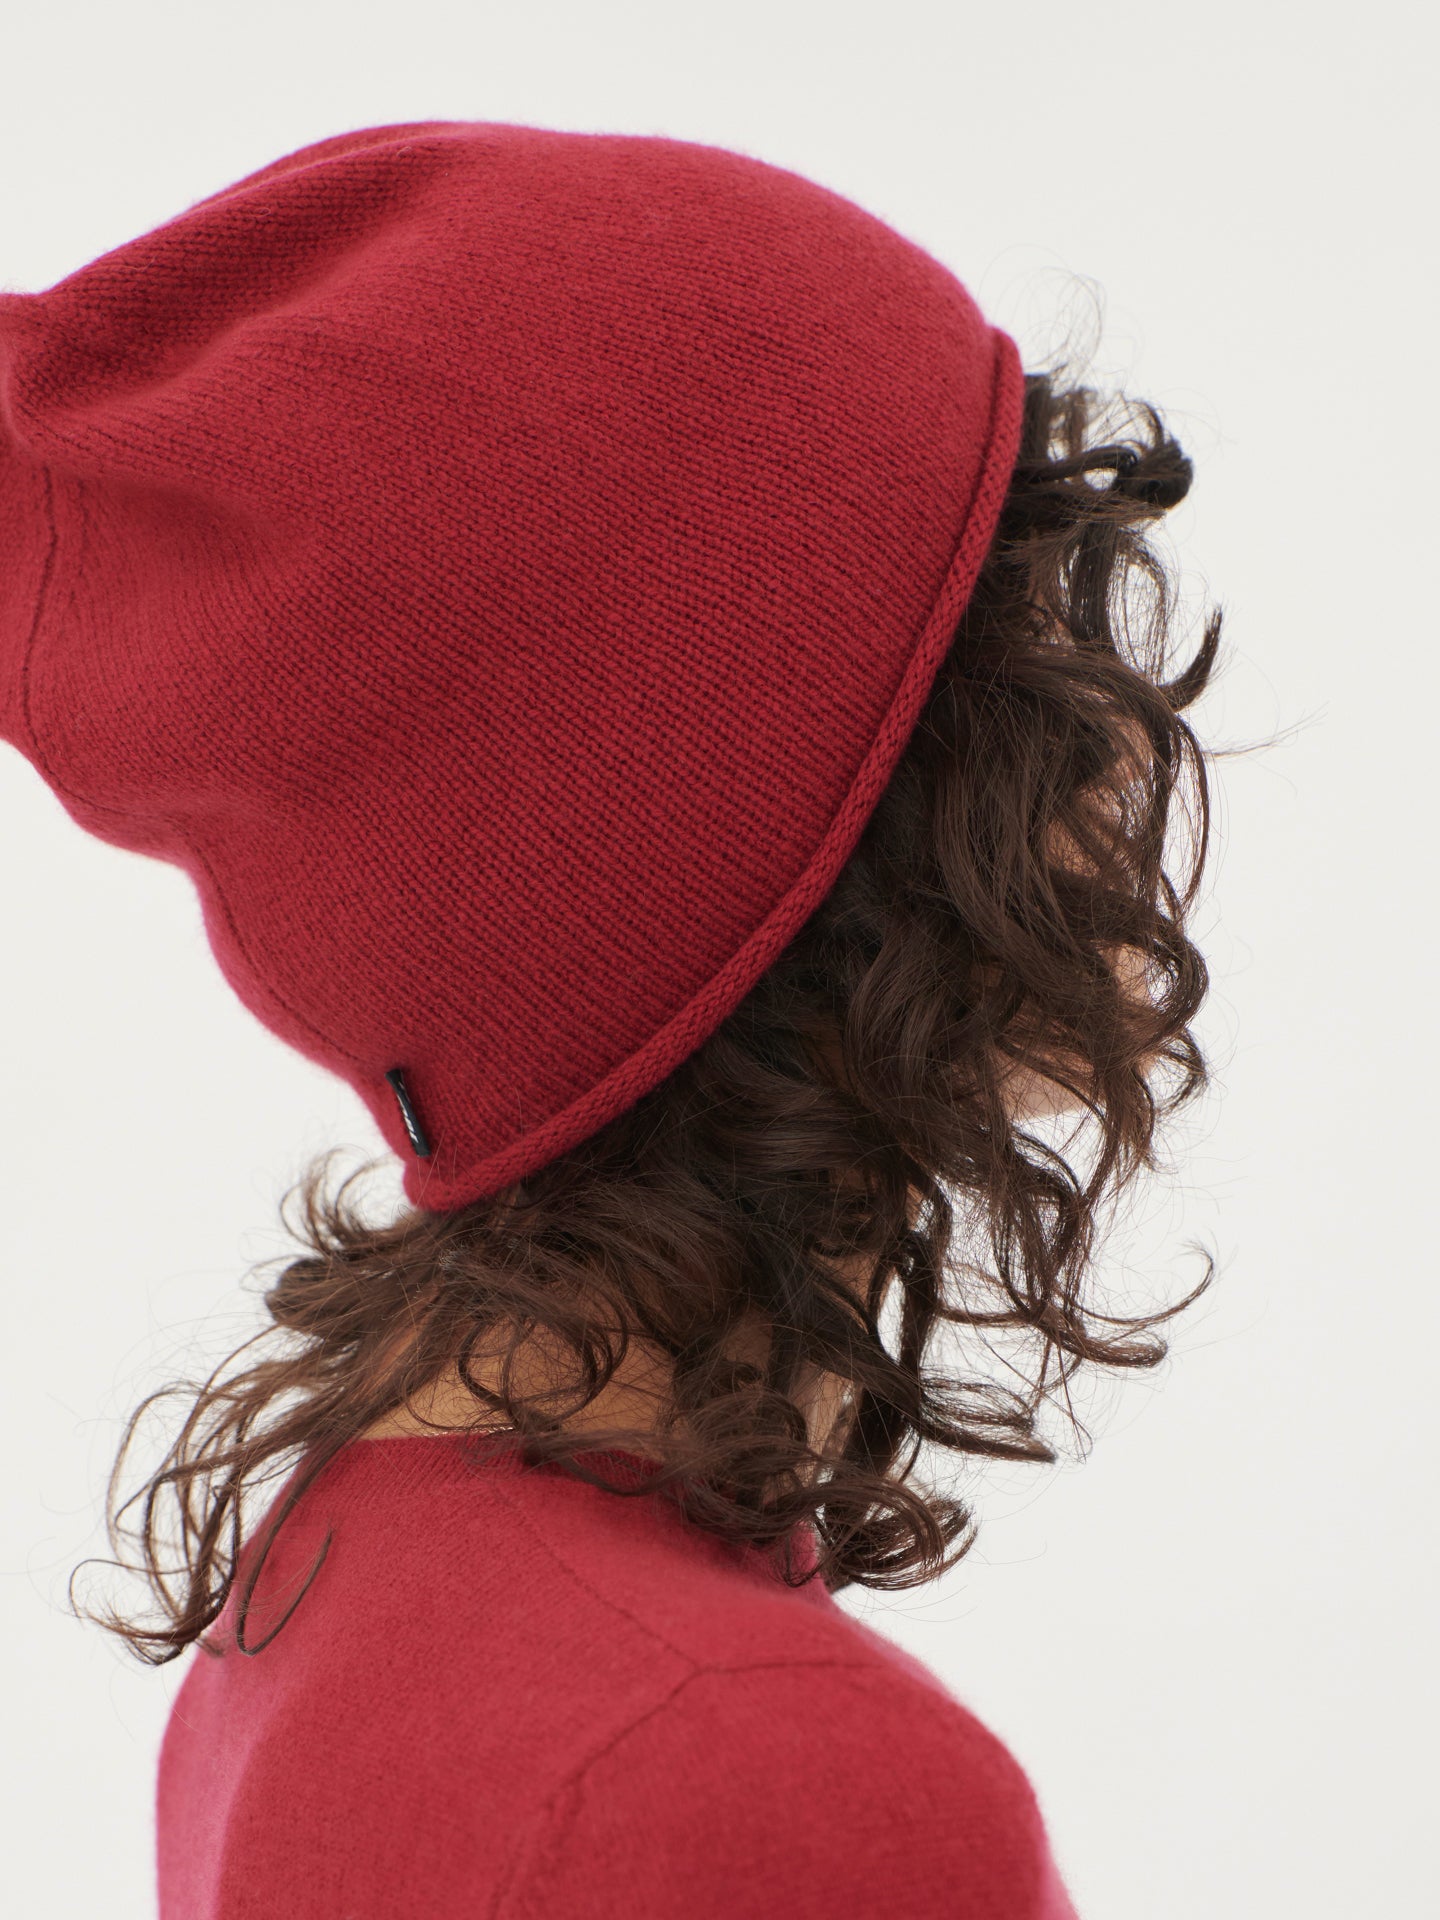 Women's Cashmere $99 Hat & Sweater Cabernet - Gobi Cashmere